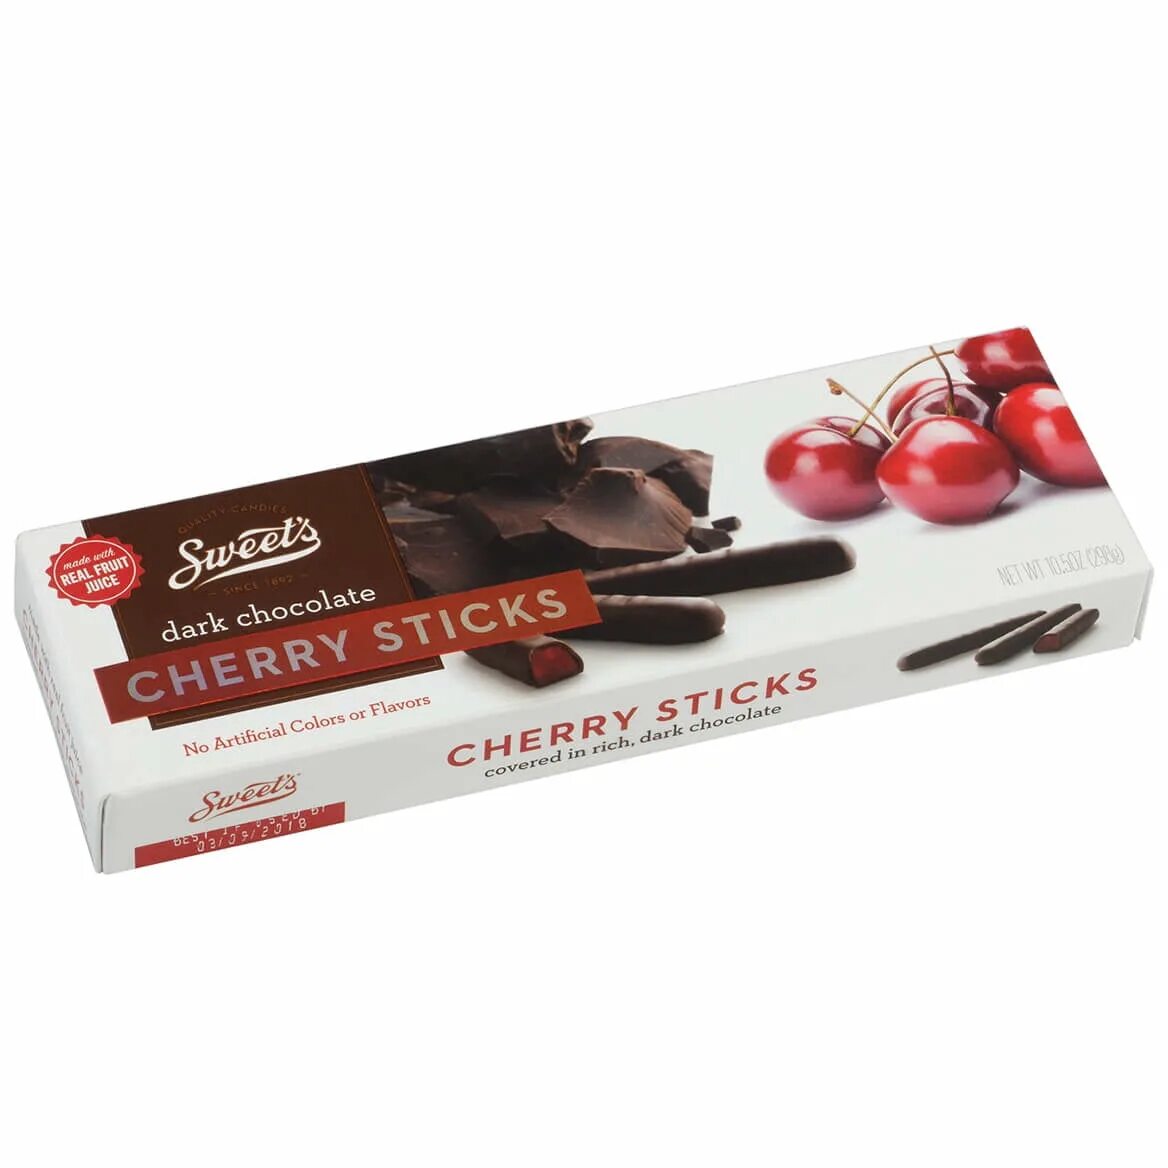 Choco sticks trap. Choco Sticks. Chocolate Sticks. Черри шоколад. Carletti Orange Chocolate Sticks 75g.